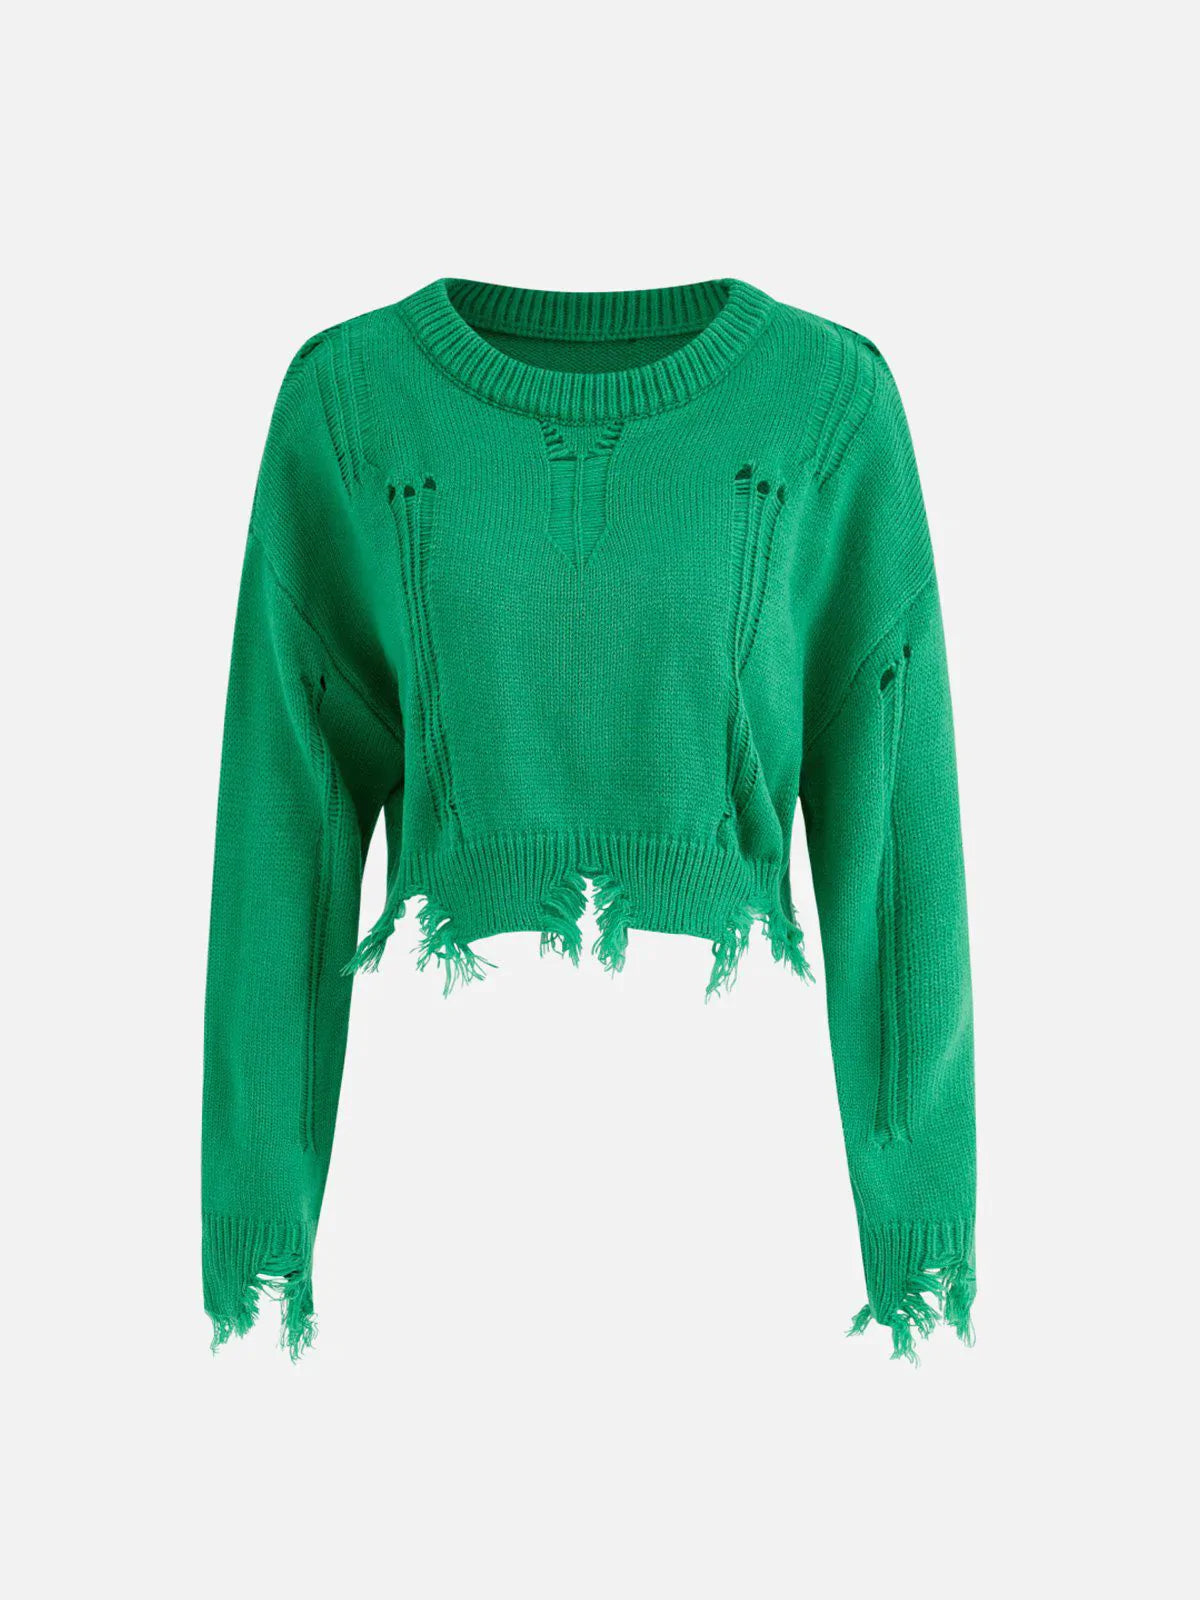 Majesda® - Irregular Hole Sweater outfit ideas streetwear fashion